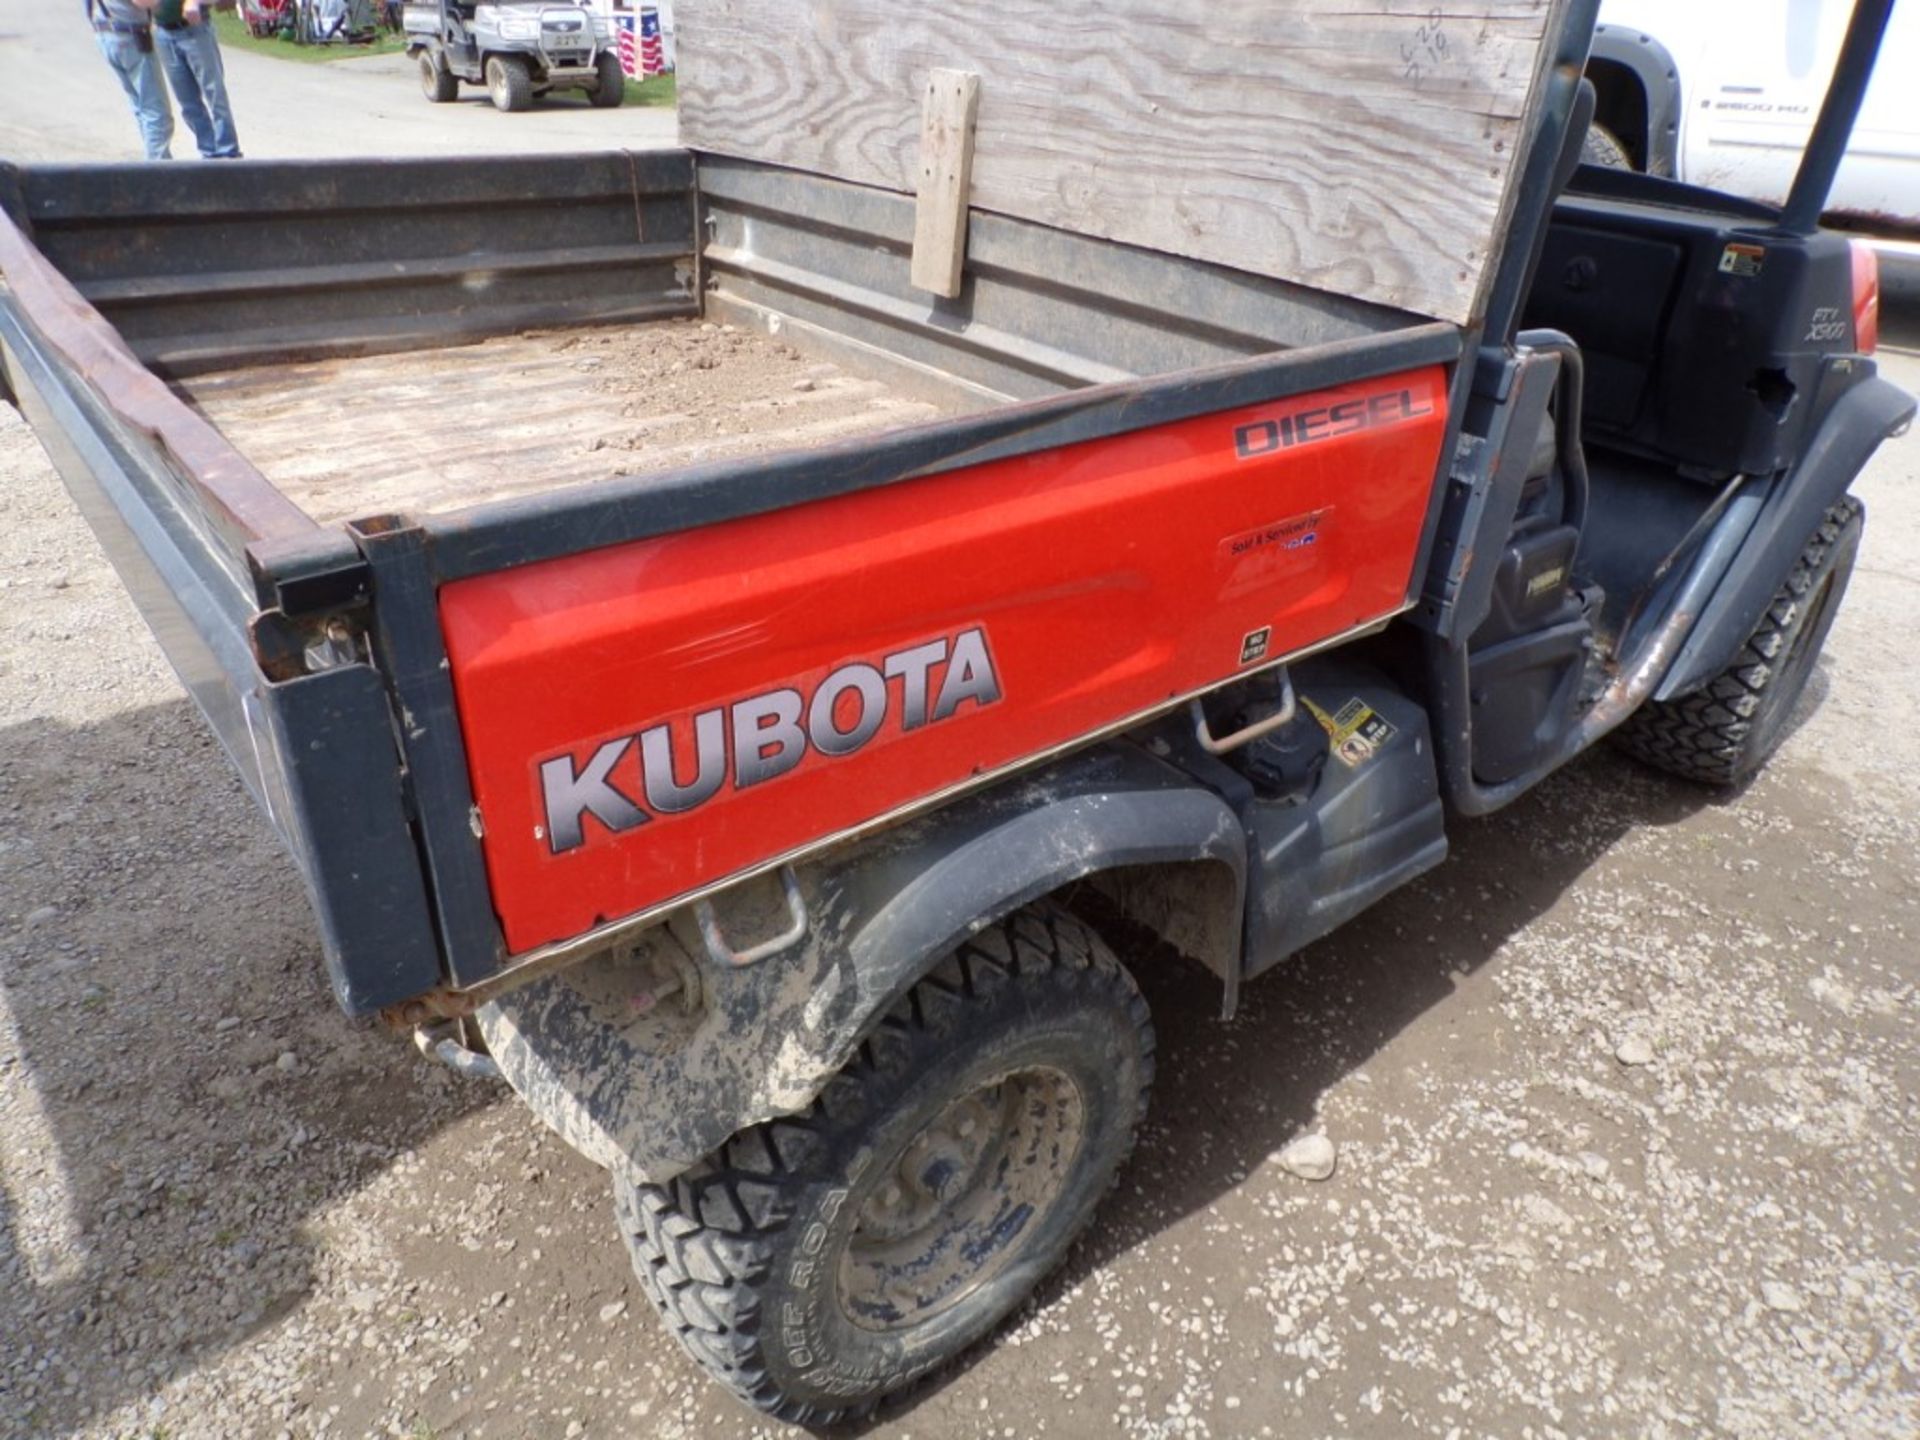 Kubota RTV X900 Dsl Utility Vehicle, Variably Hydro. Trans., 1366 Hrs., Power Dump, S/N 28412 ( - Image 5 of 6